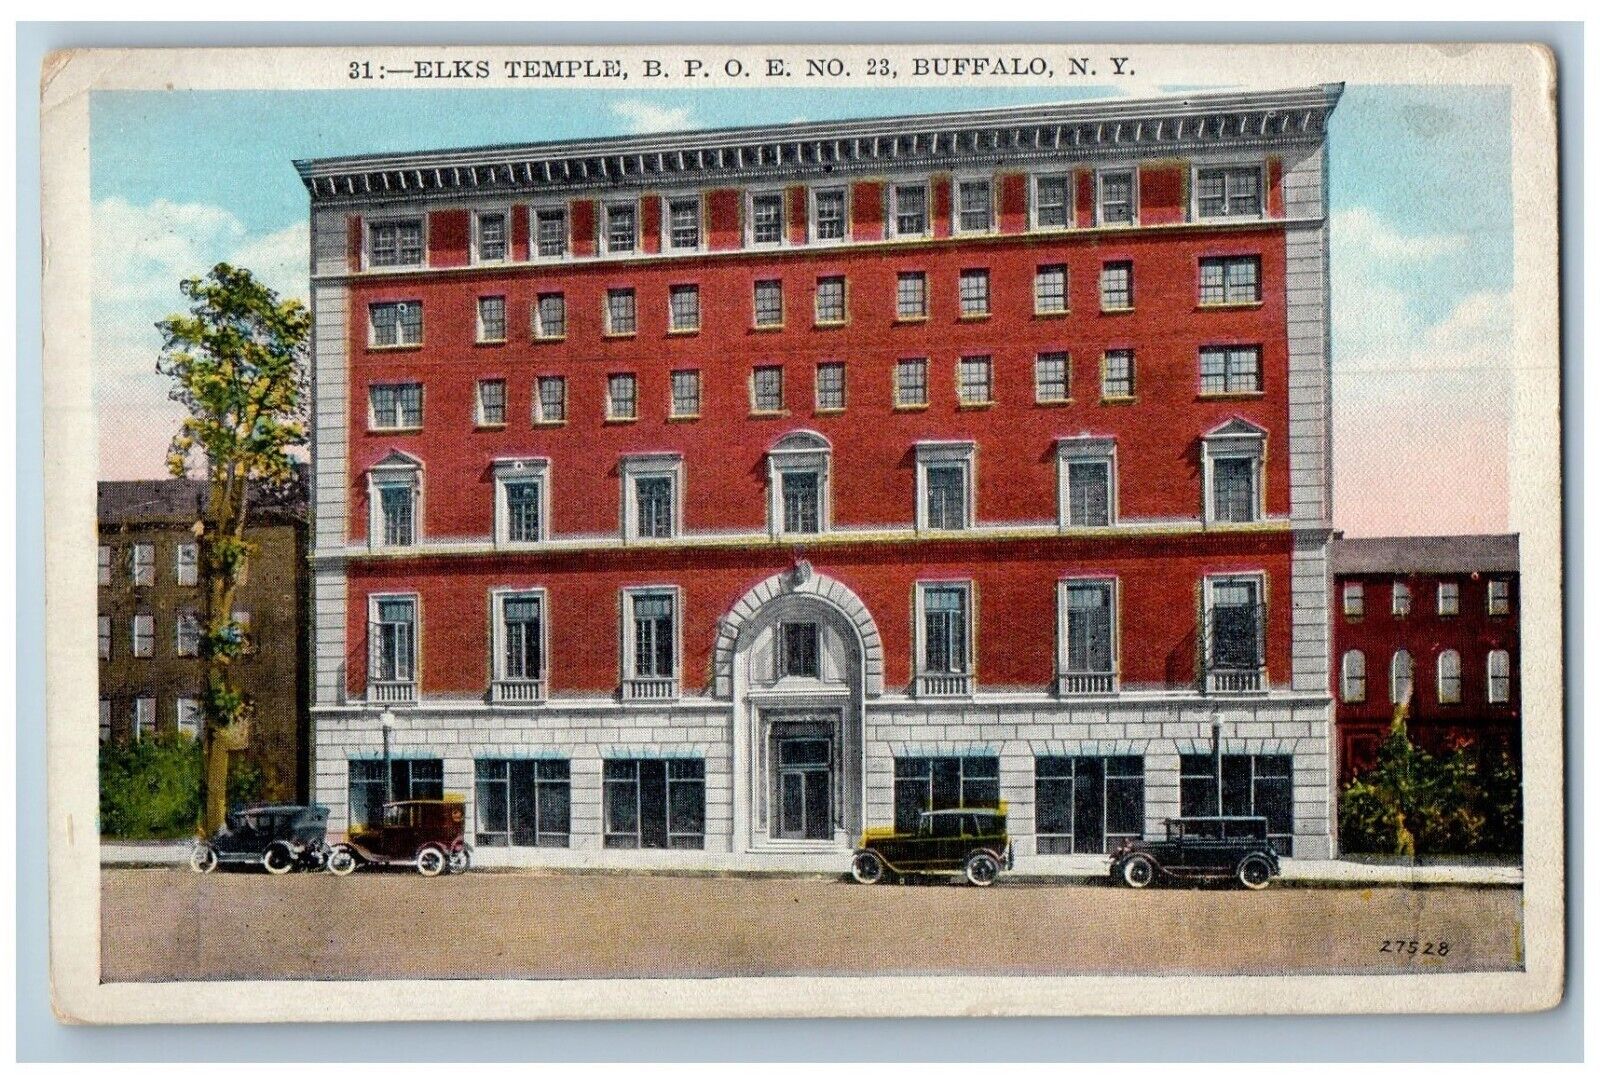 Buffalo New York Postcard Elks Temple BPOE Exterior View Building 1927 Vintage